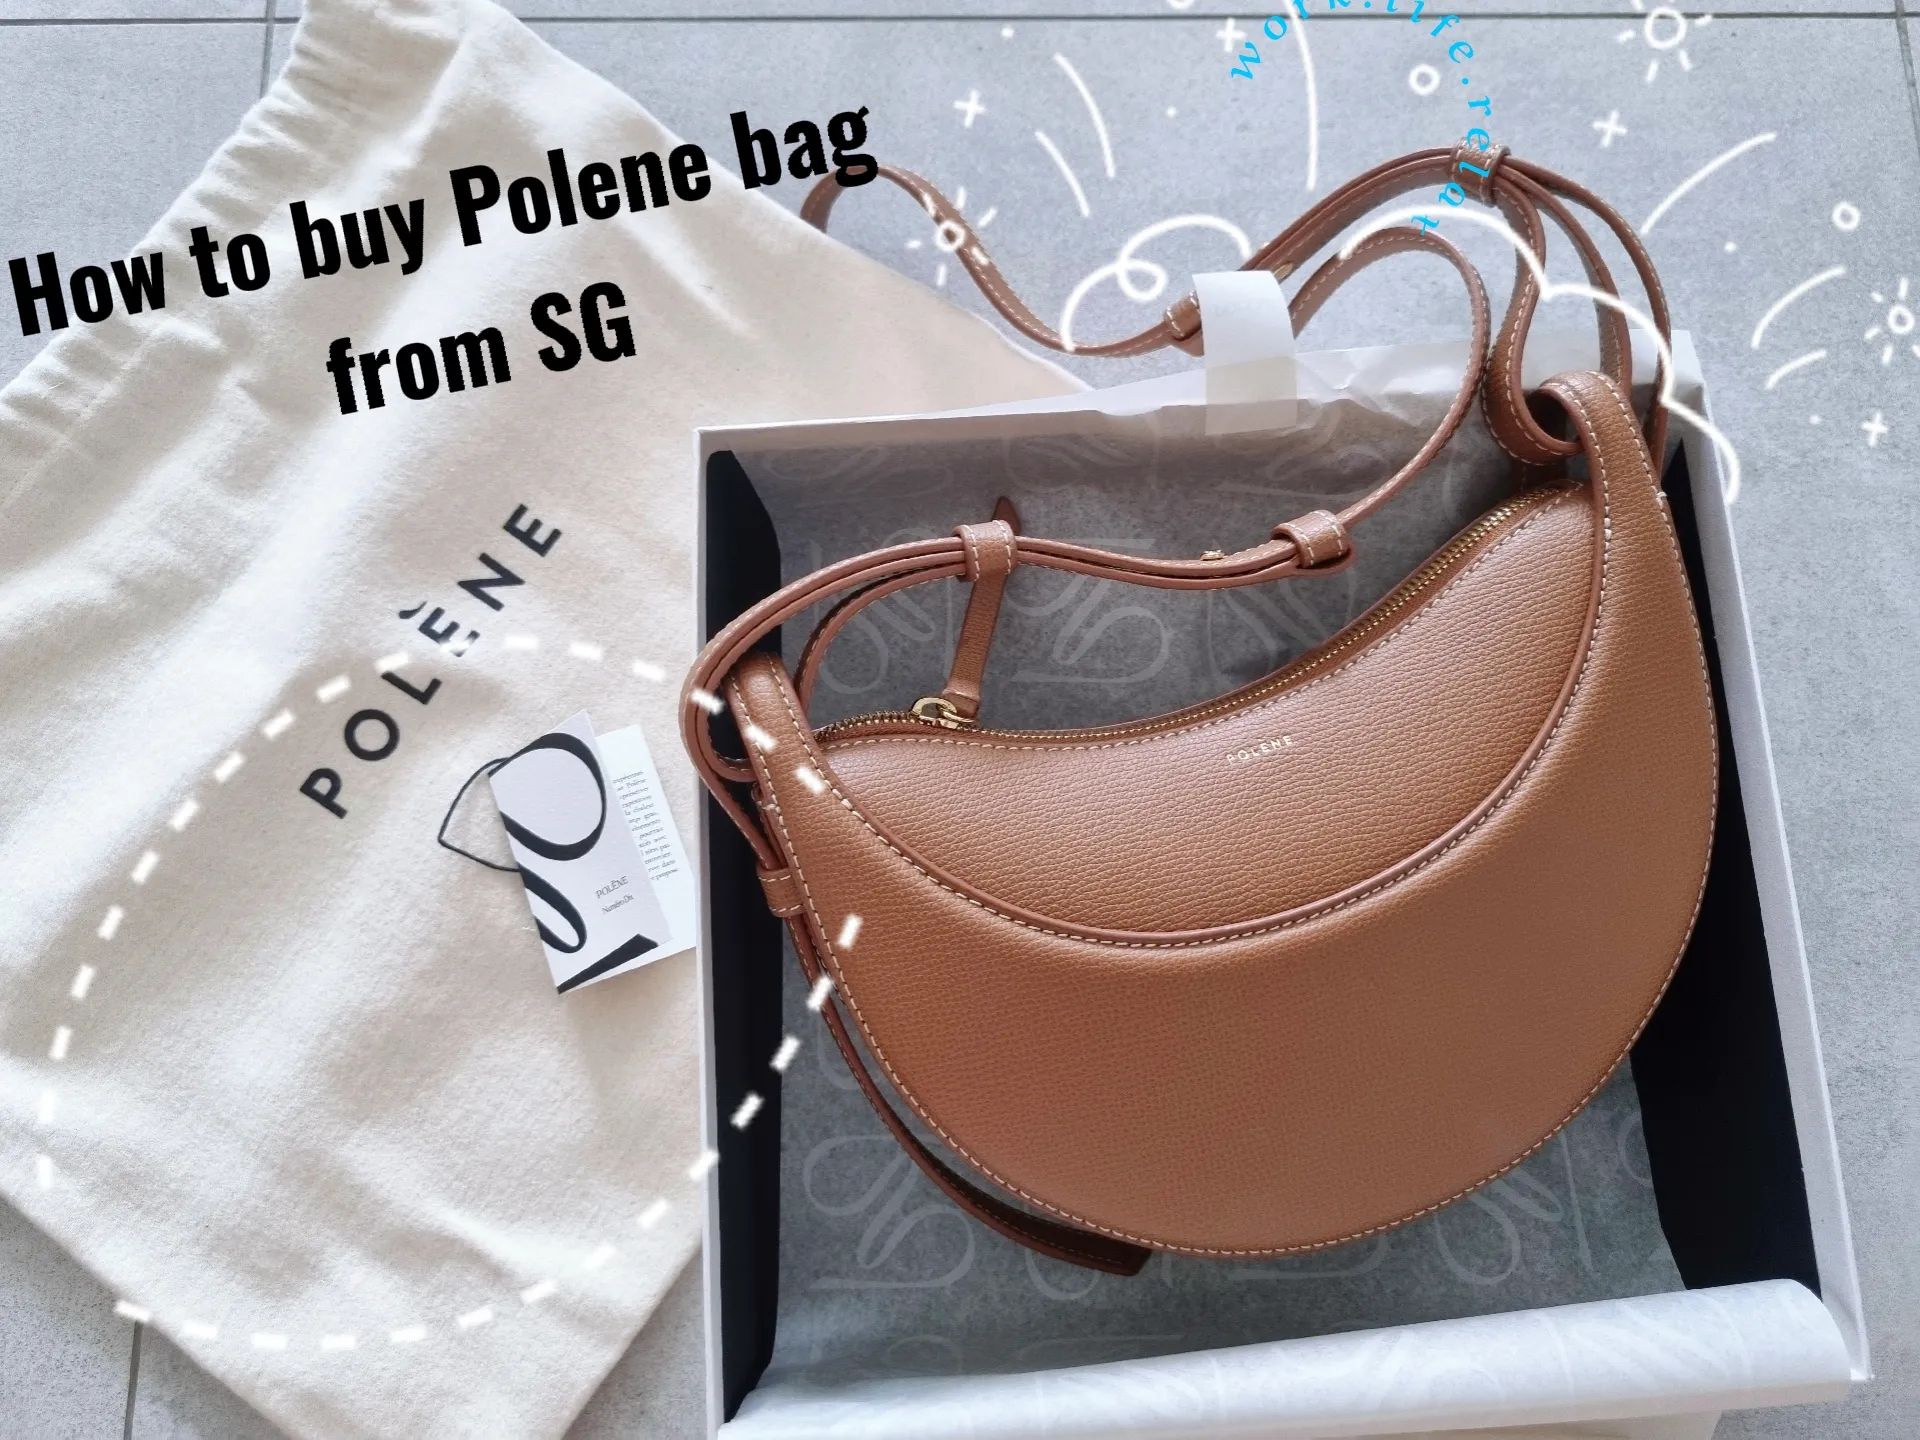 How to Spot a Fake Polene Bag - since wen